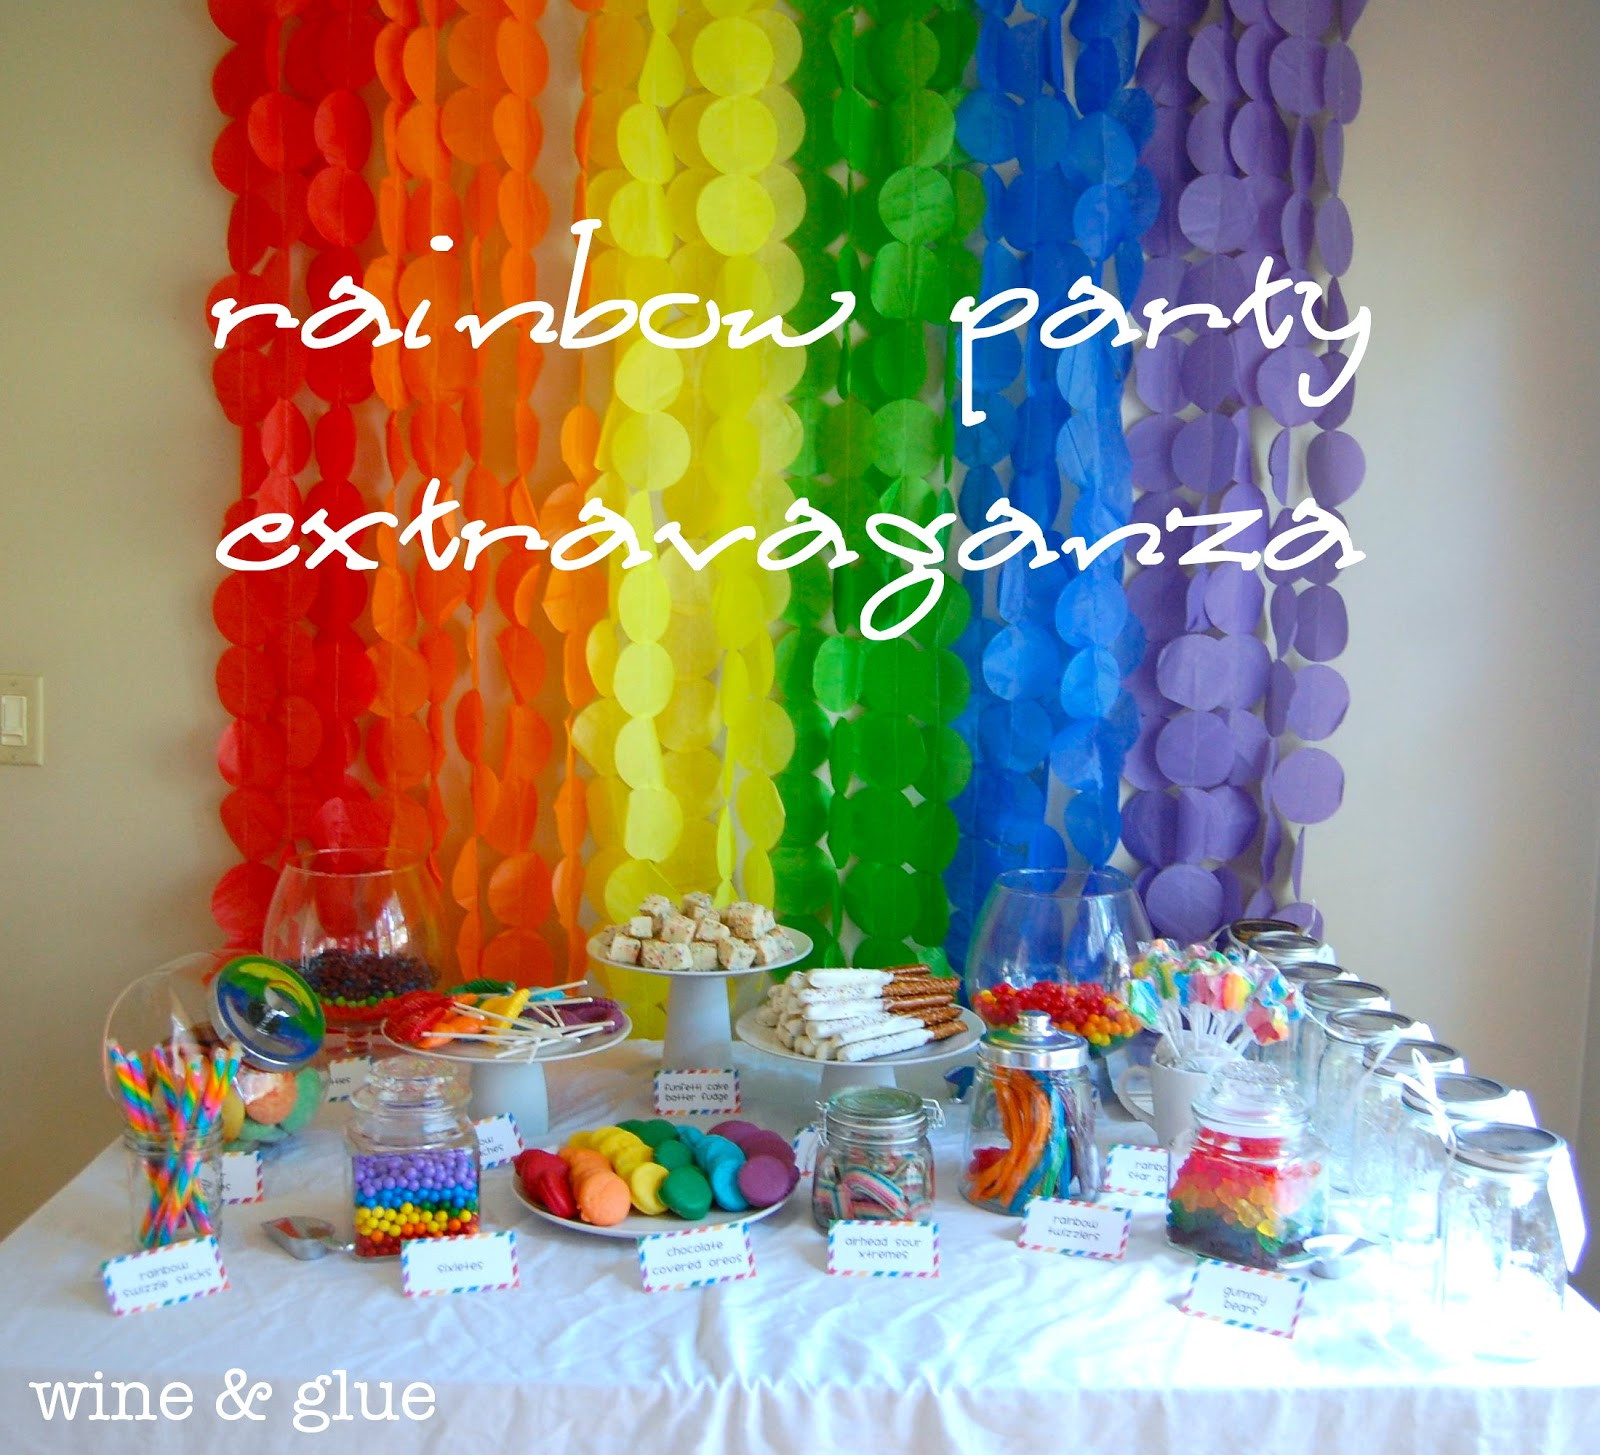 Rainbow Birthday Party Ideas
 Rainbow Party Extravaganza Wine & Glue